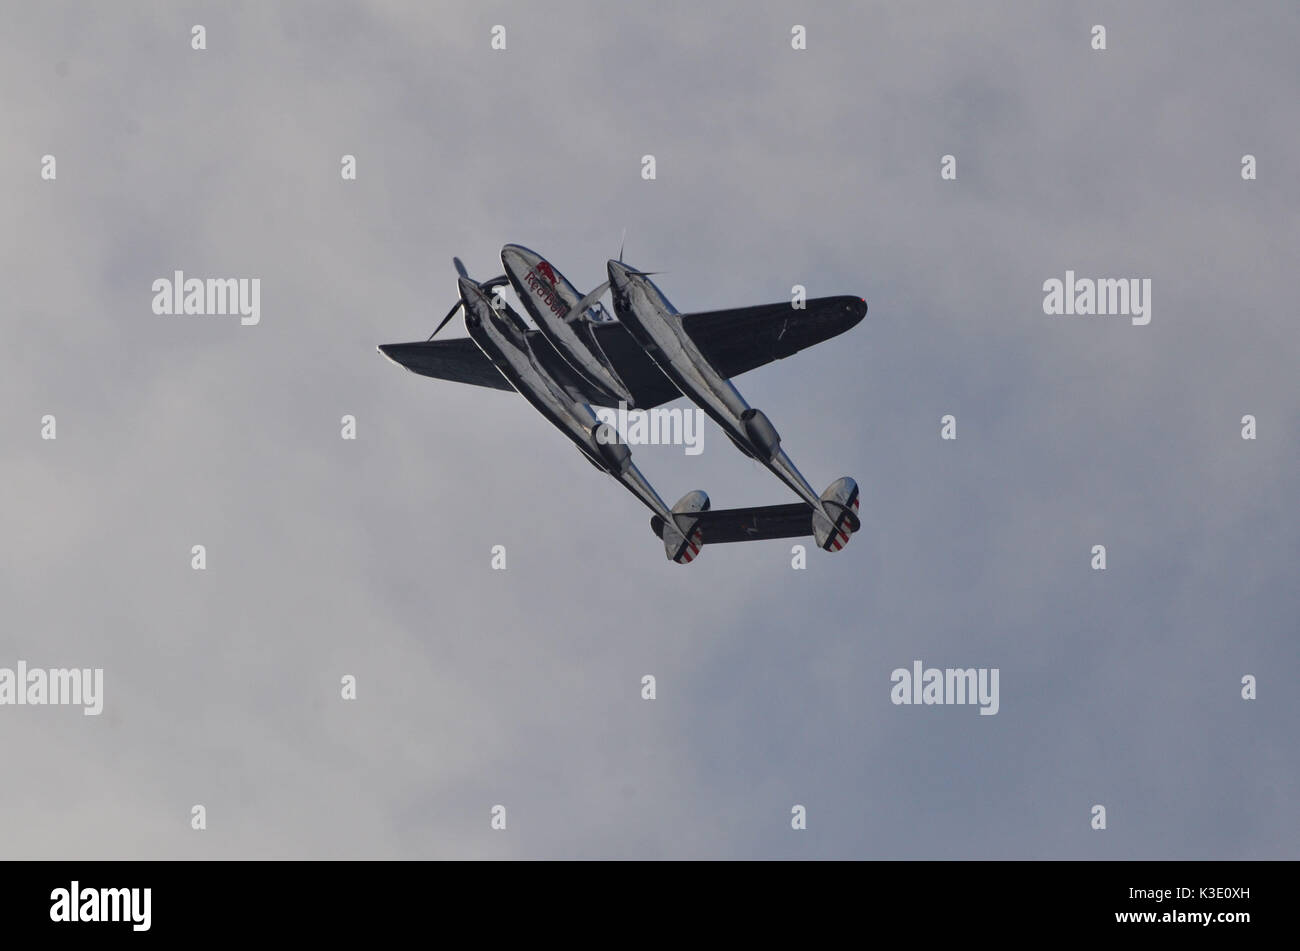 Germany, Bavaria, air display, aerobatics, fighter bomber, Stock Photo